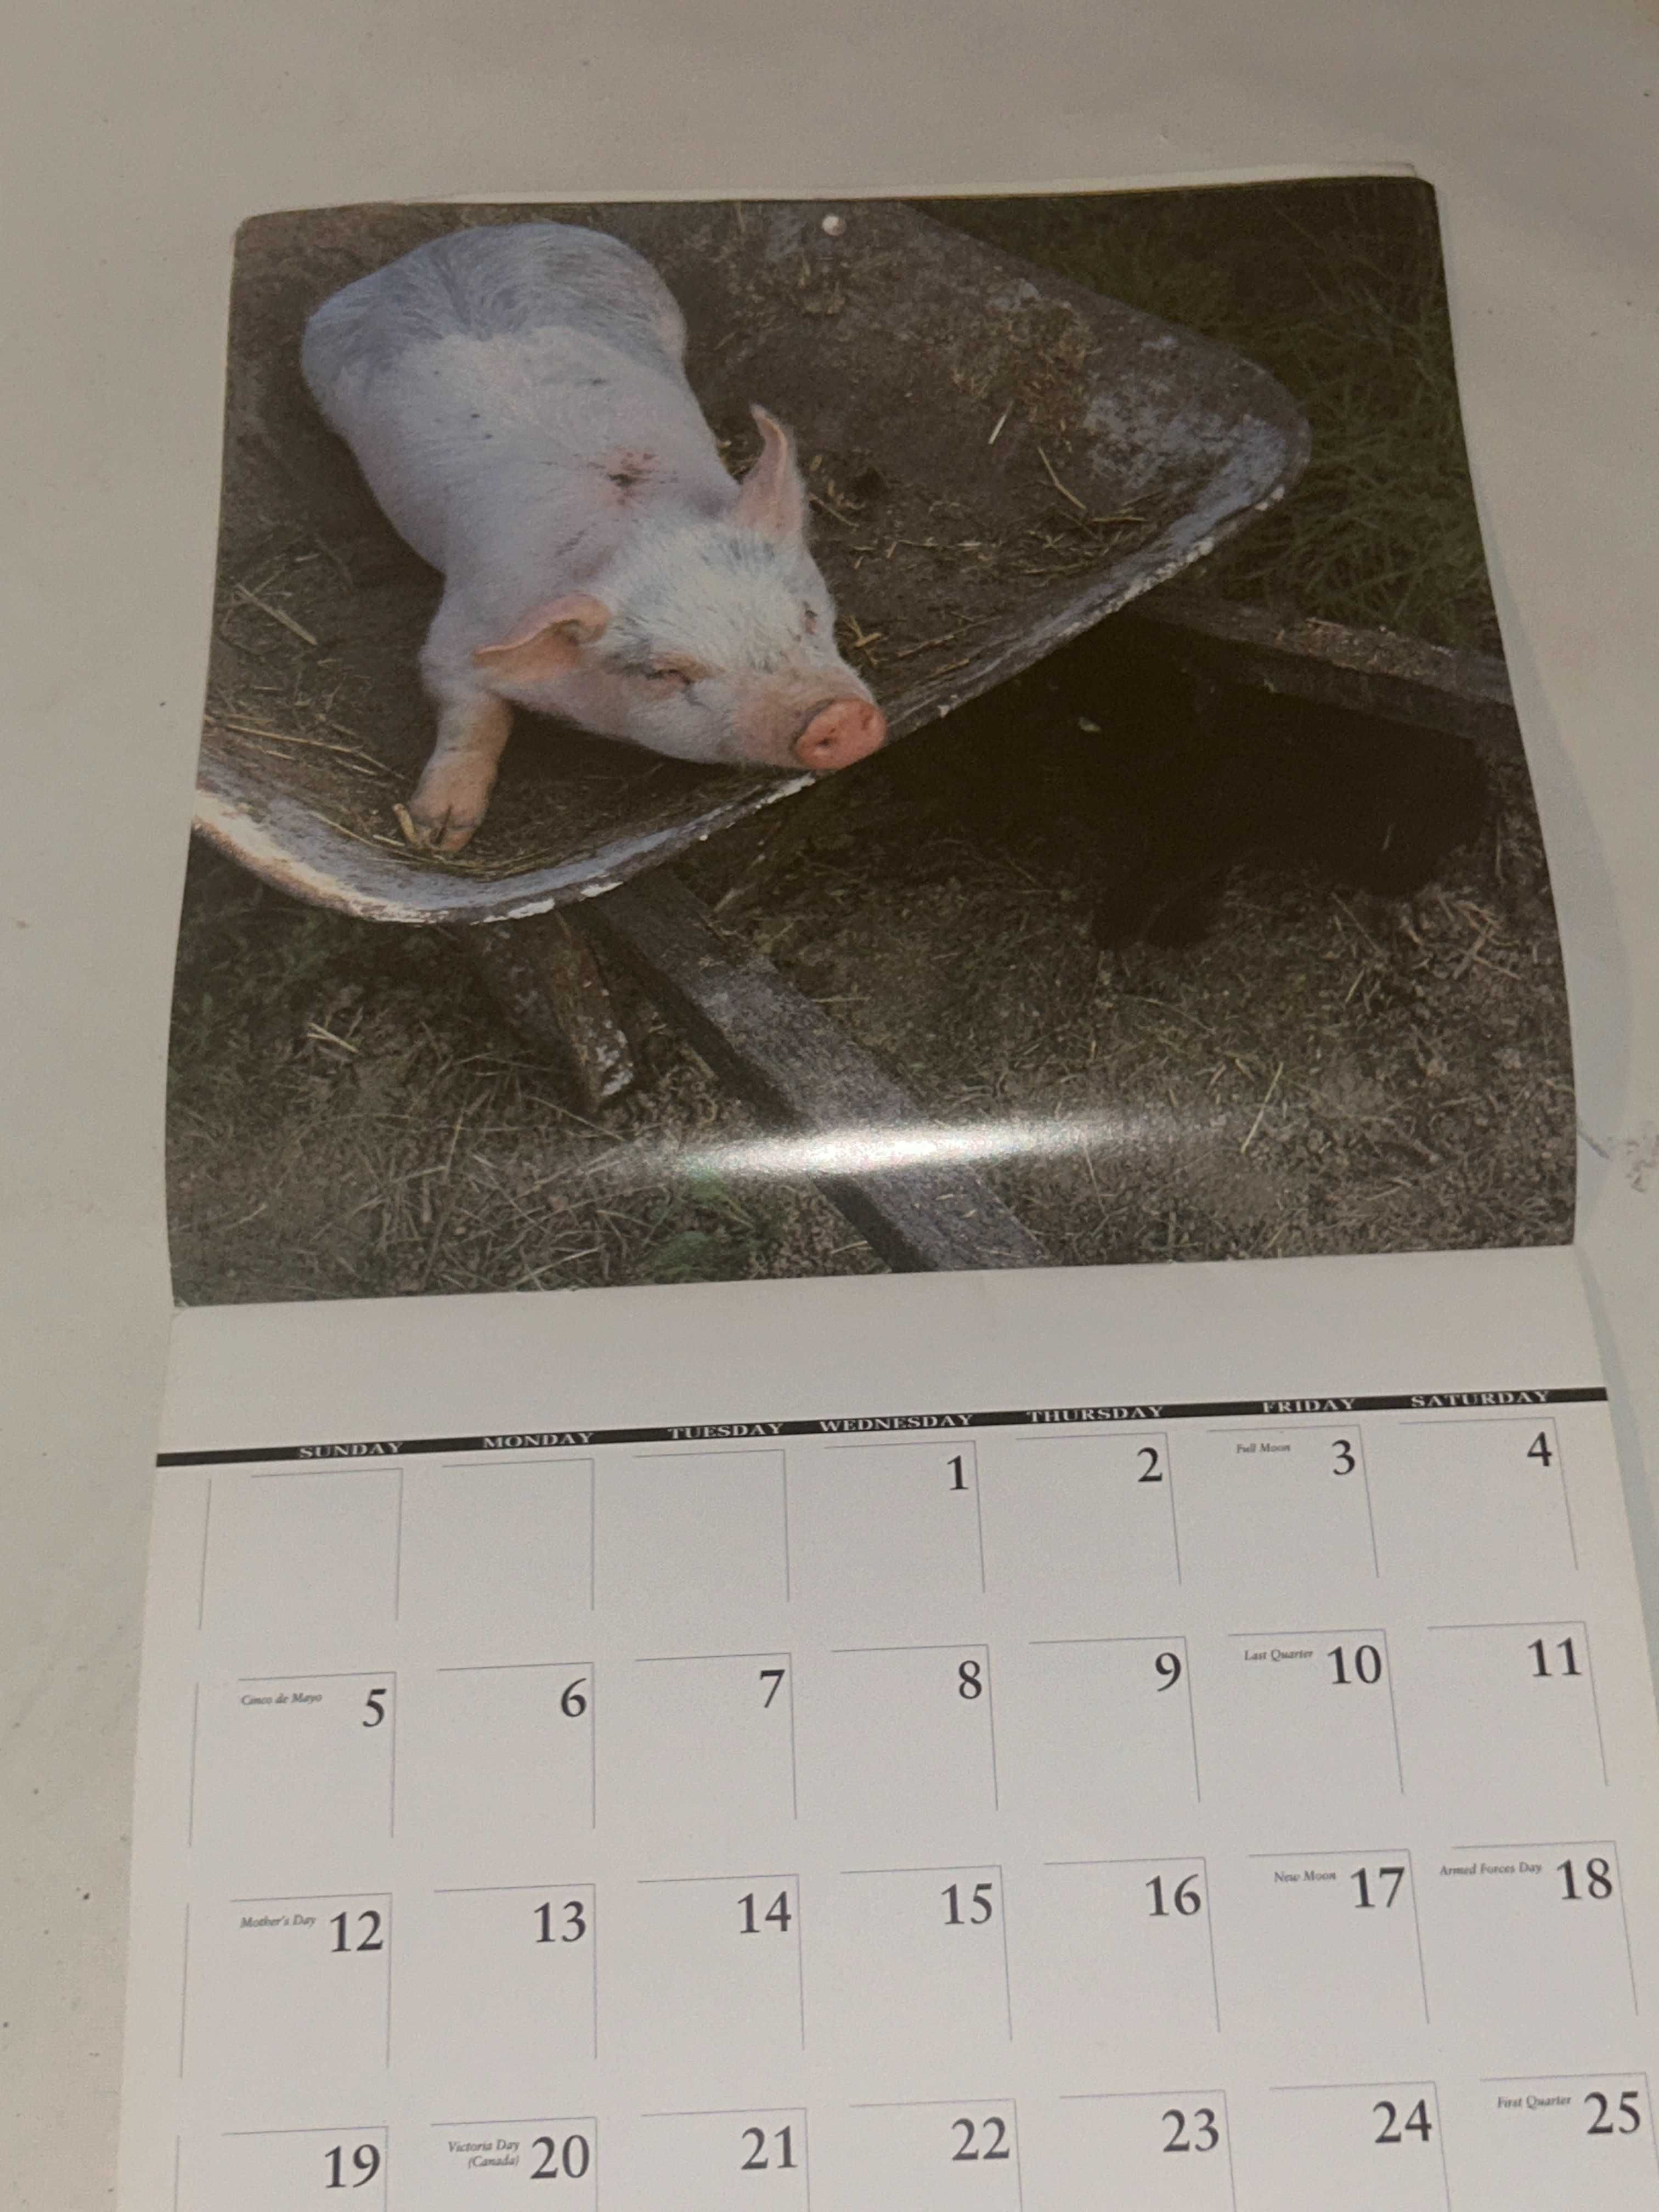 Kalendarz PIGS - 1996r. - zdjęcia D.L.Winston